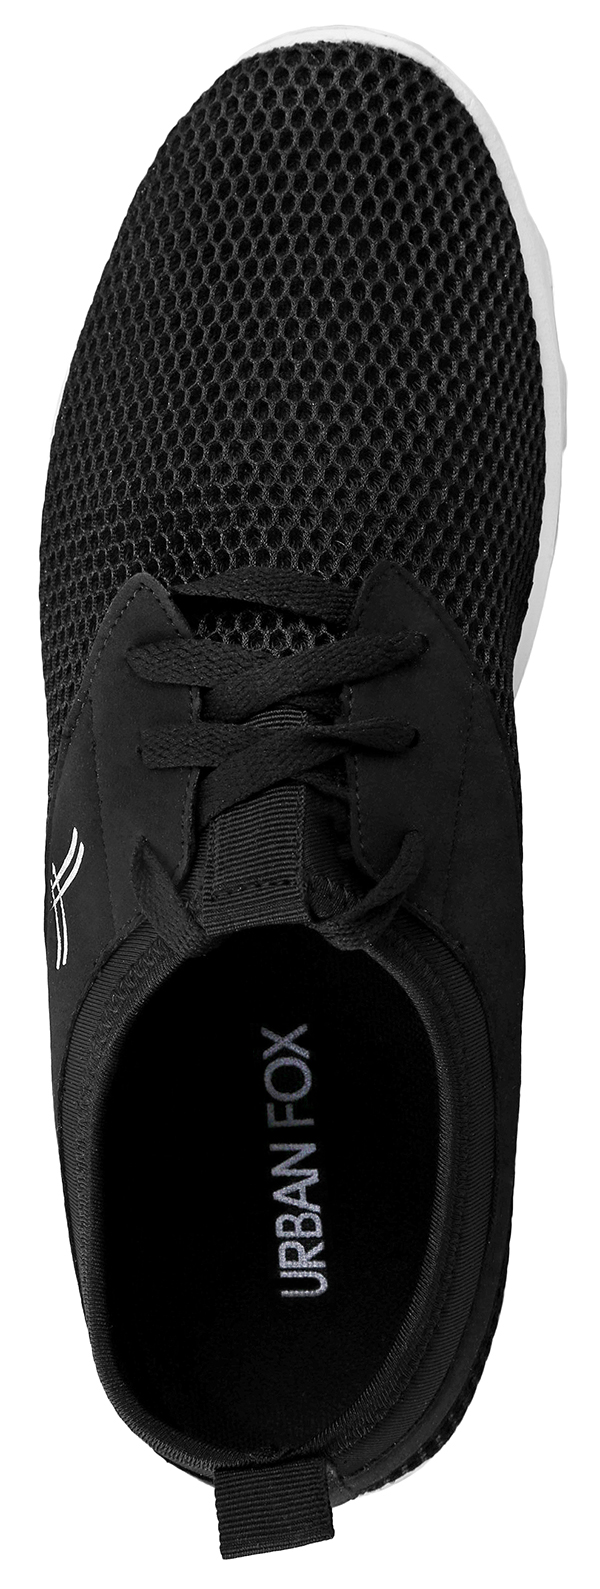 Urban Fox Men's Breeze Lightweight Shoes | Lightweight Shoes for Men | Casual Shoes | Walking Shoes for Men | Black/White 13 M US - image 4 of 7